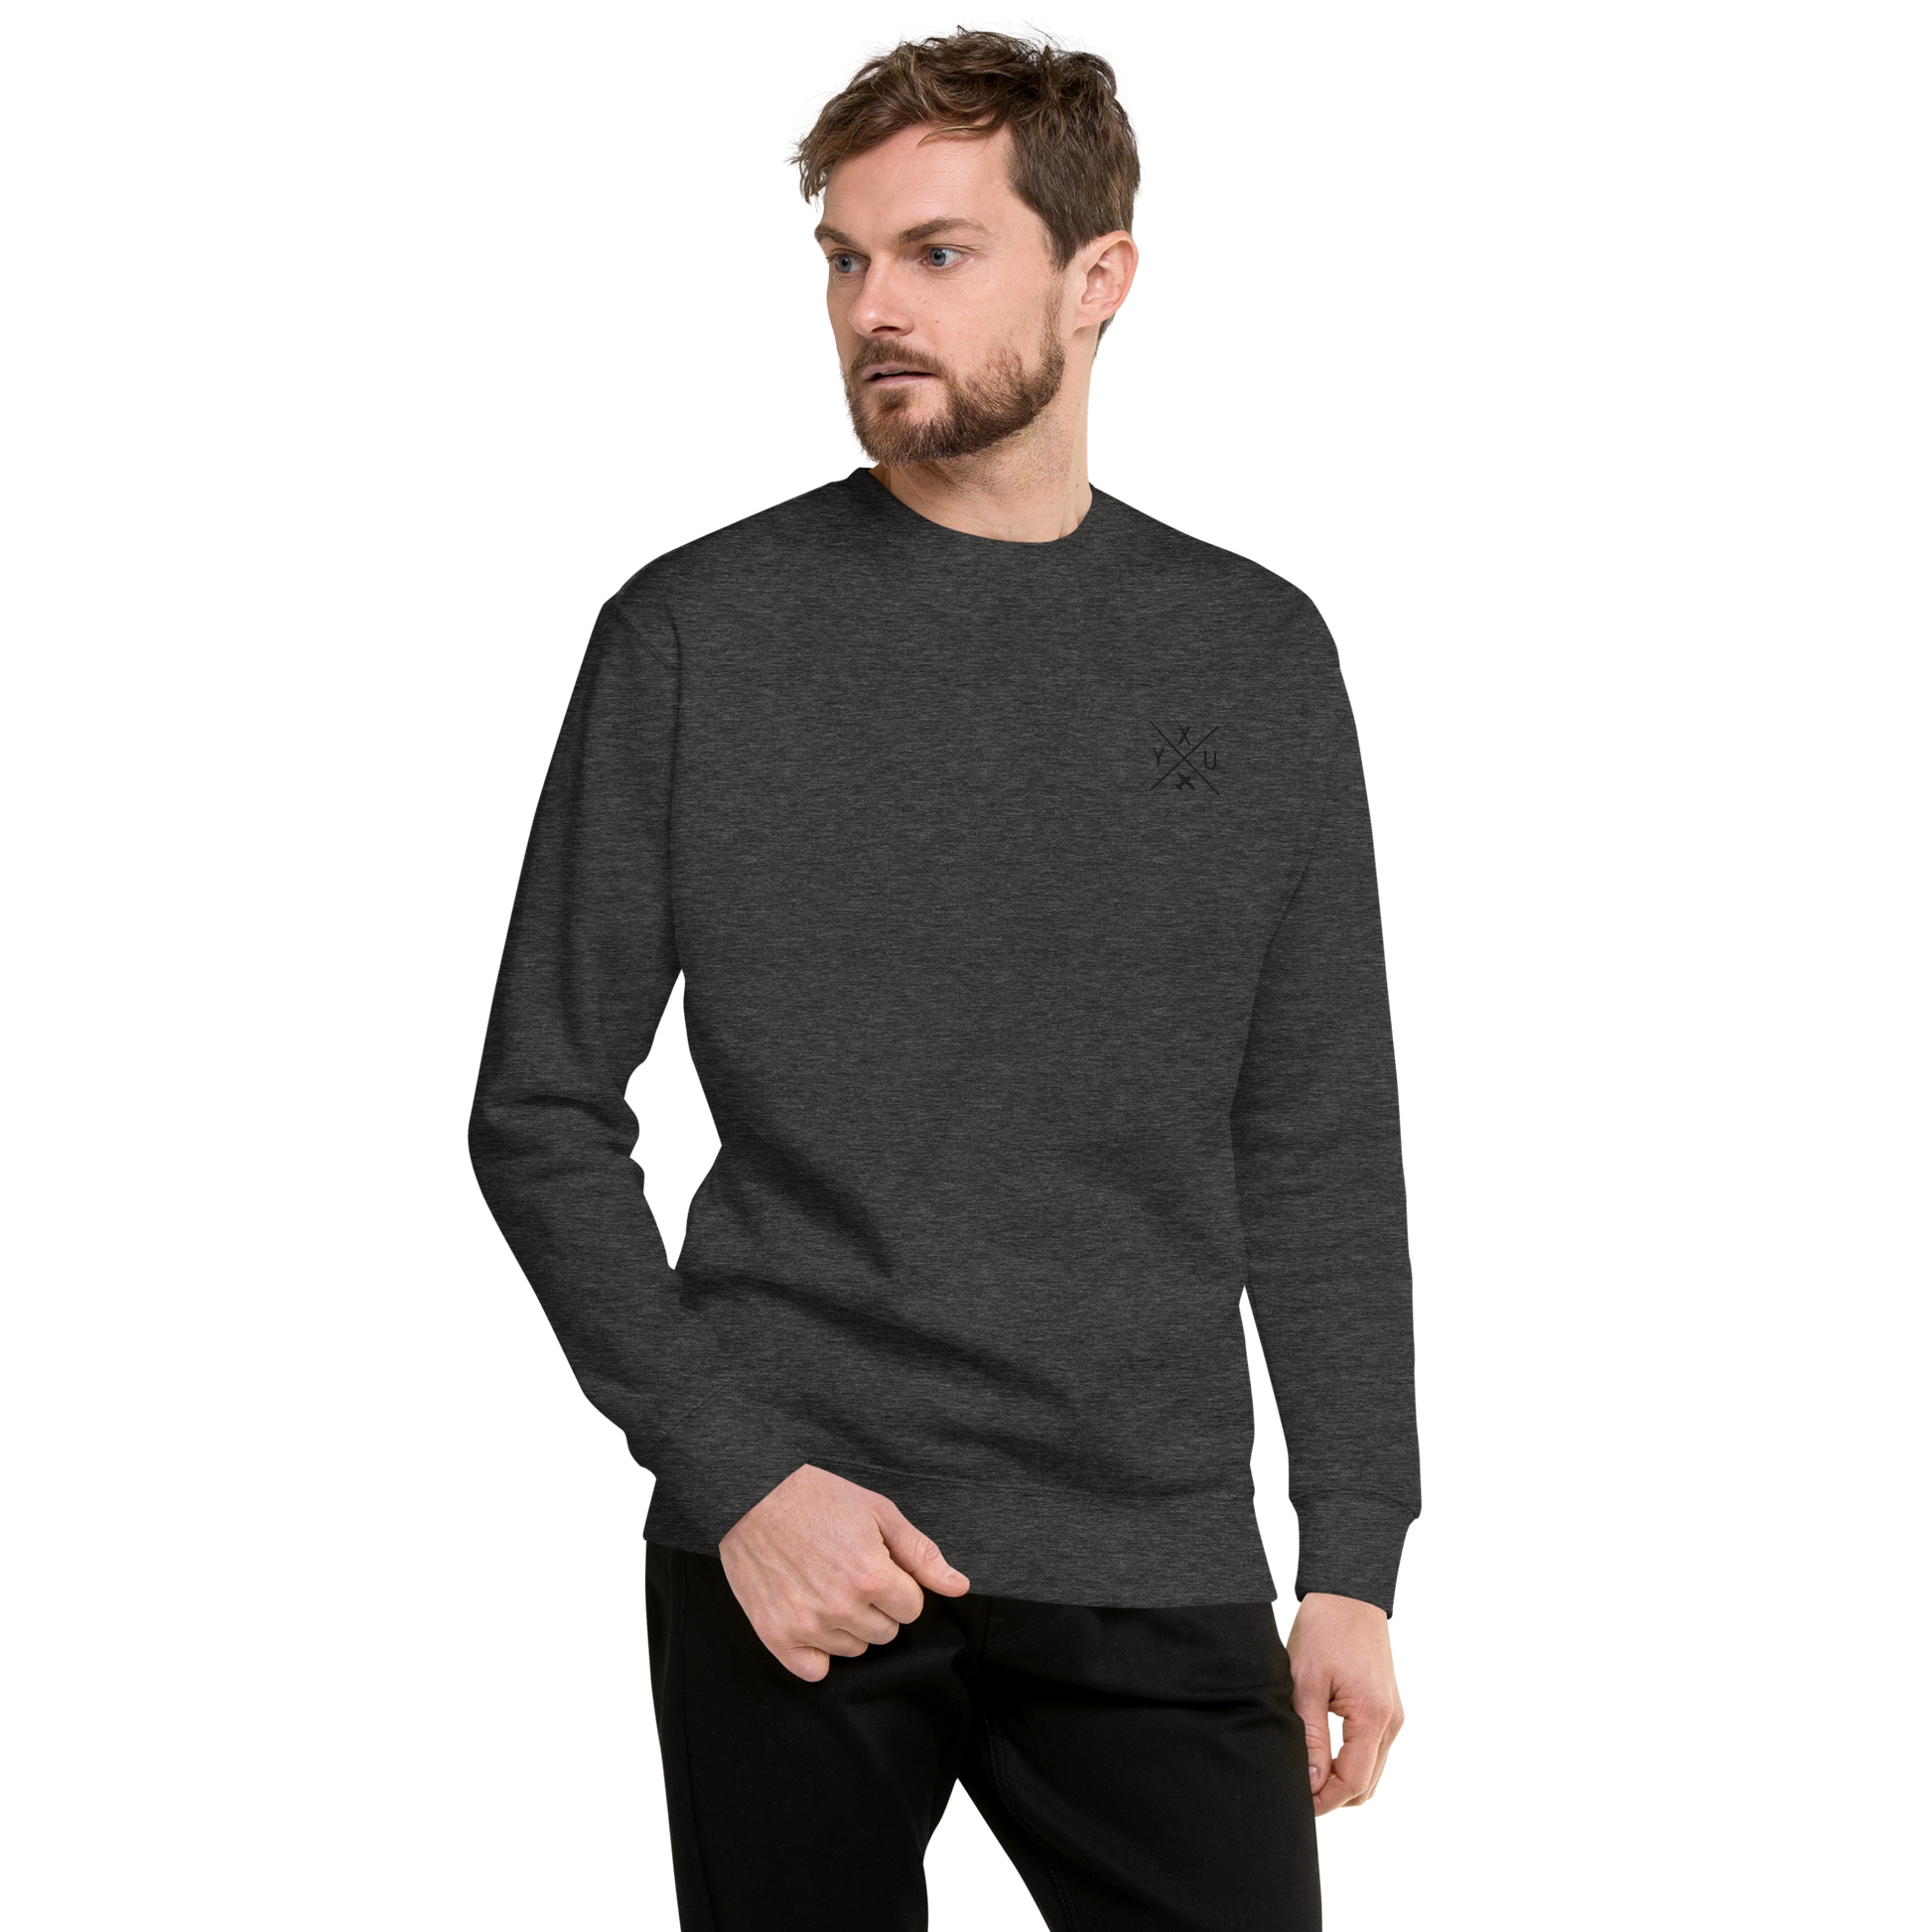 YHM Designs - YXU London Premium Sweatshirt - Crossed-X Design with Airport Code and Vintage Propliner - Black Embroidery - Image 08